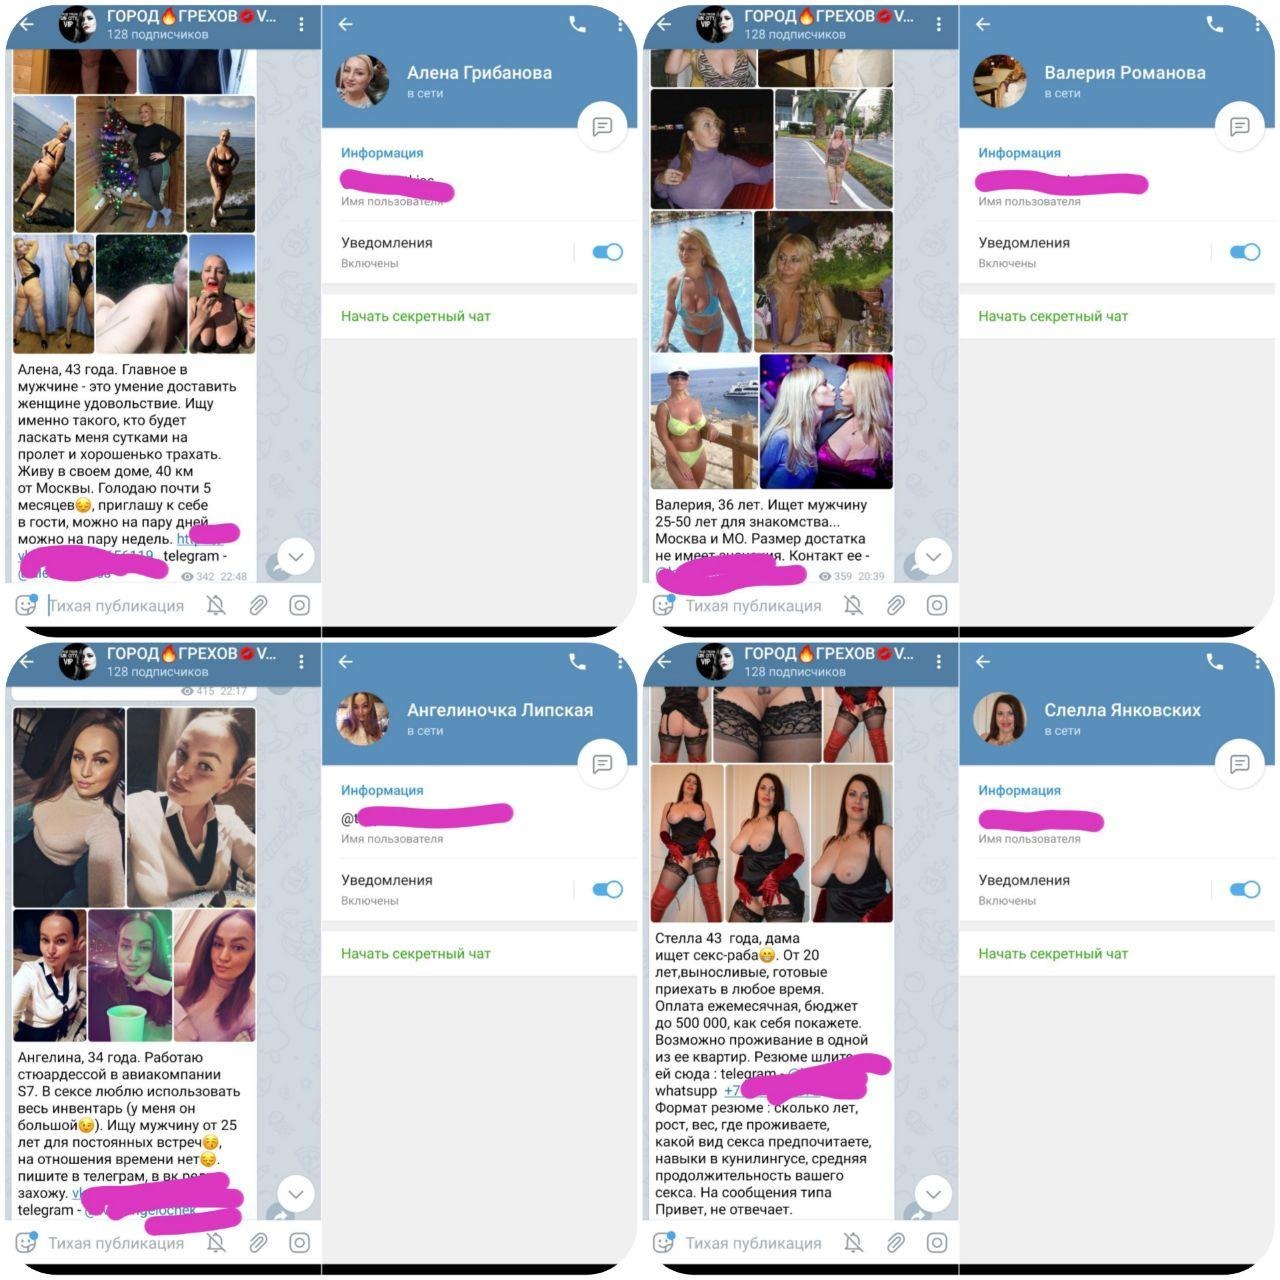 Porn videos group in telegram